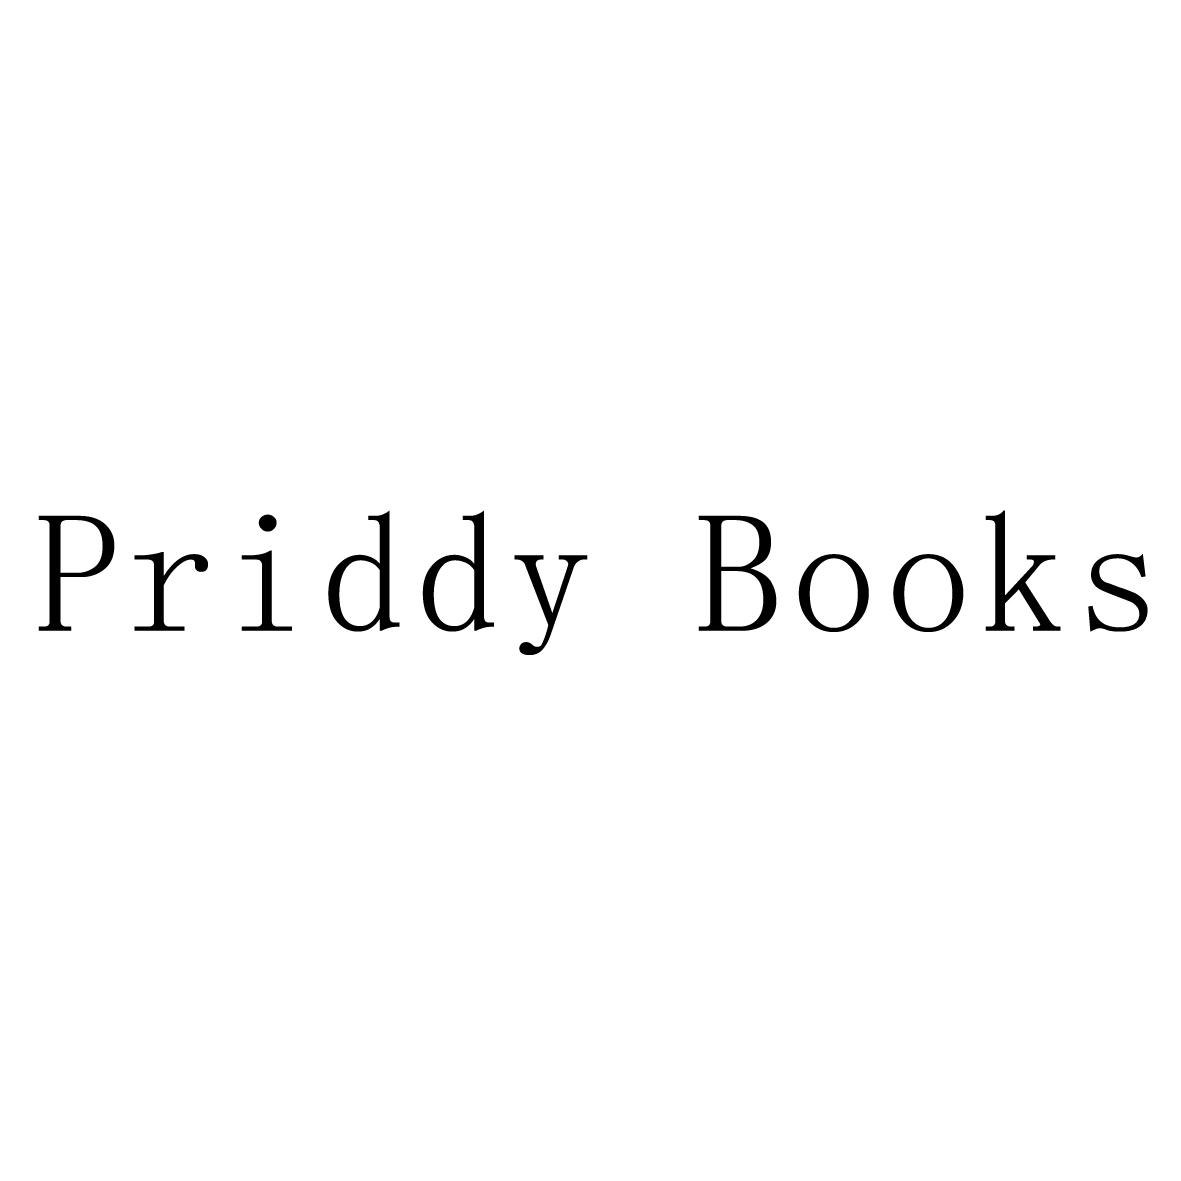 PRIDDY BOOKS